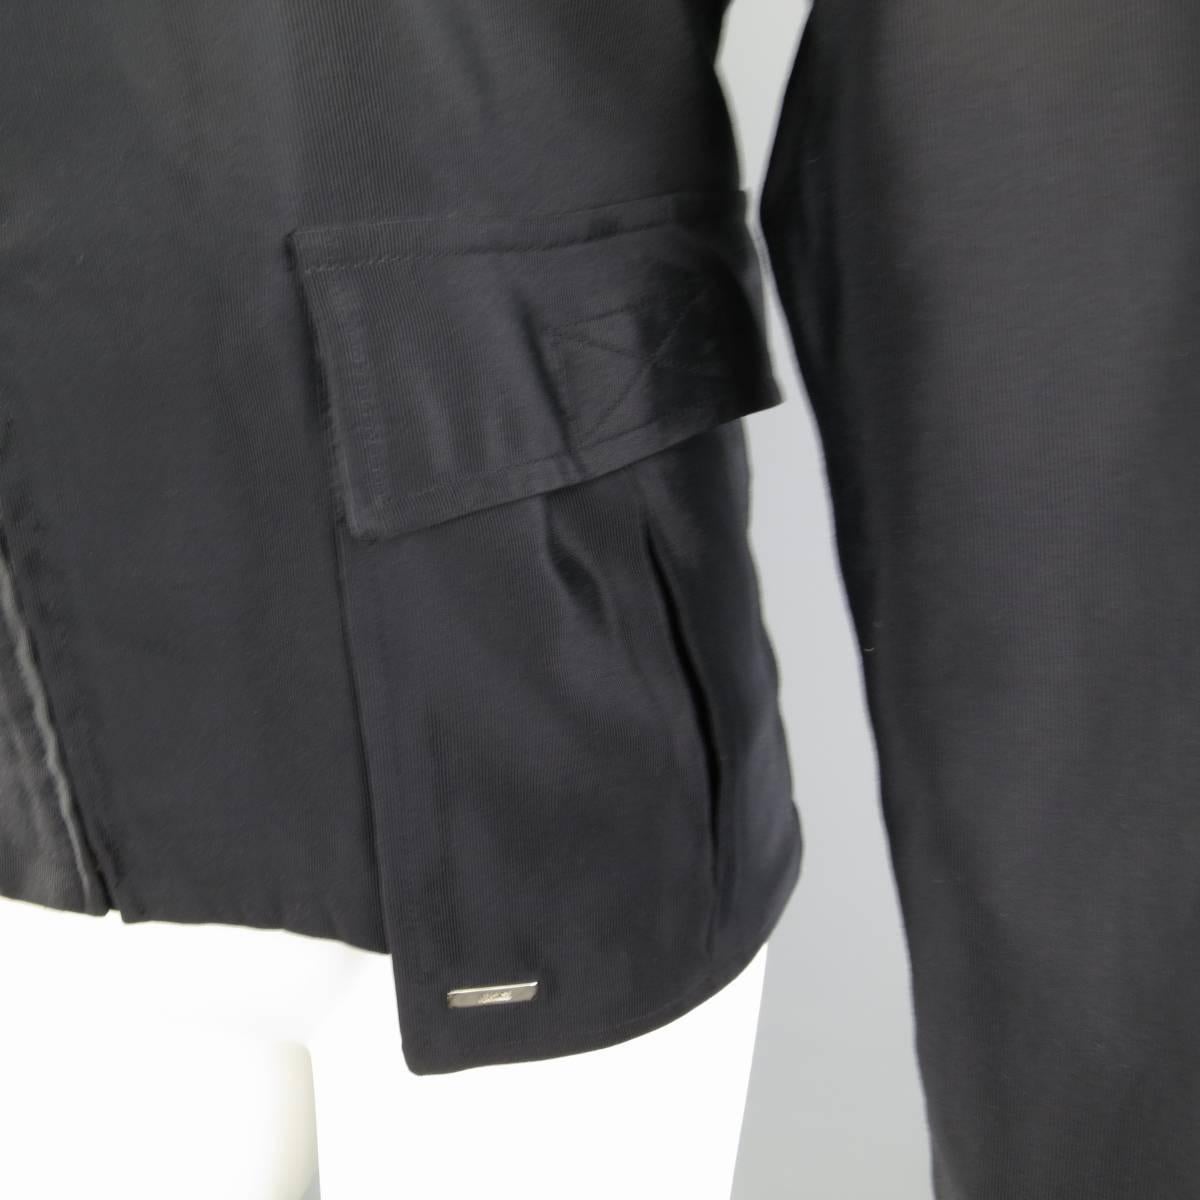 Women's 1990s GIANNI VERSACE Size 8 Black Cotton / Rayon High Collar Military Jacket